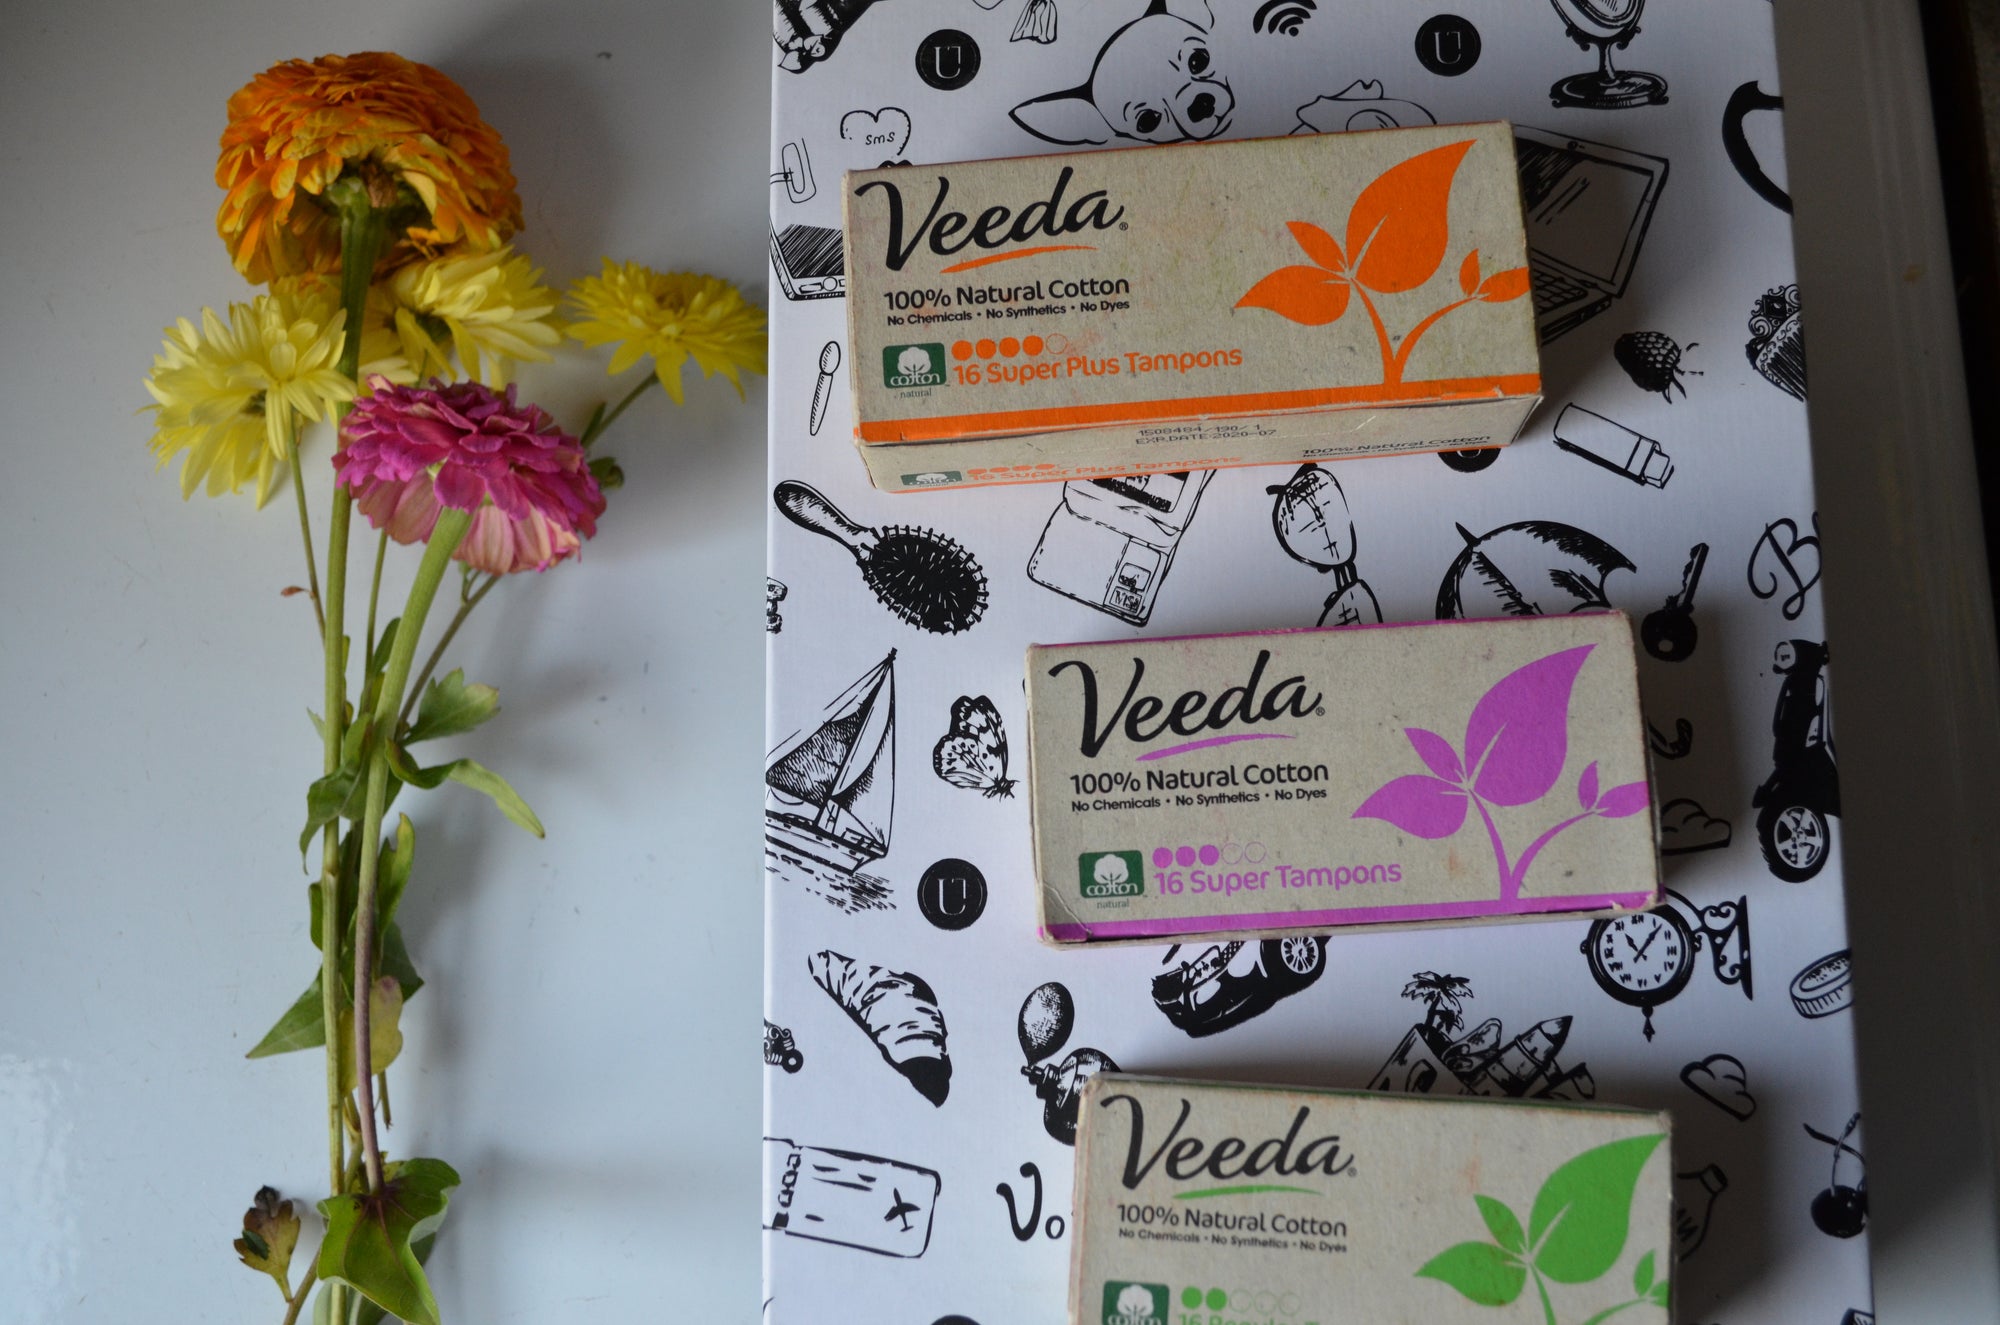 Veeda 100% natural cotton tampon & Pads Review!